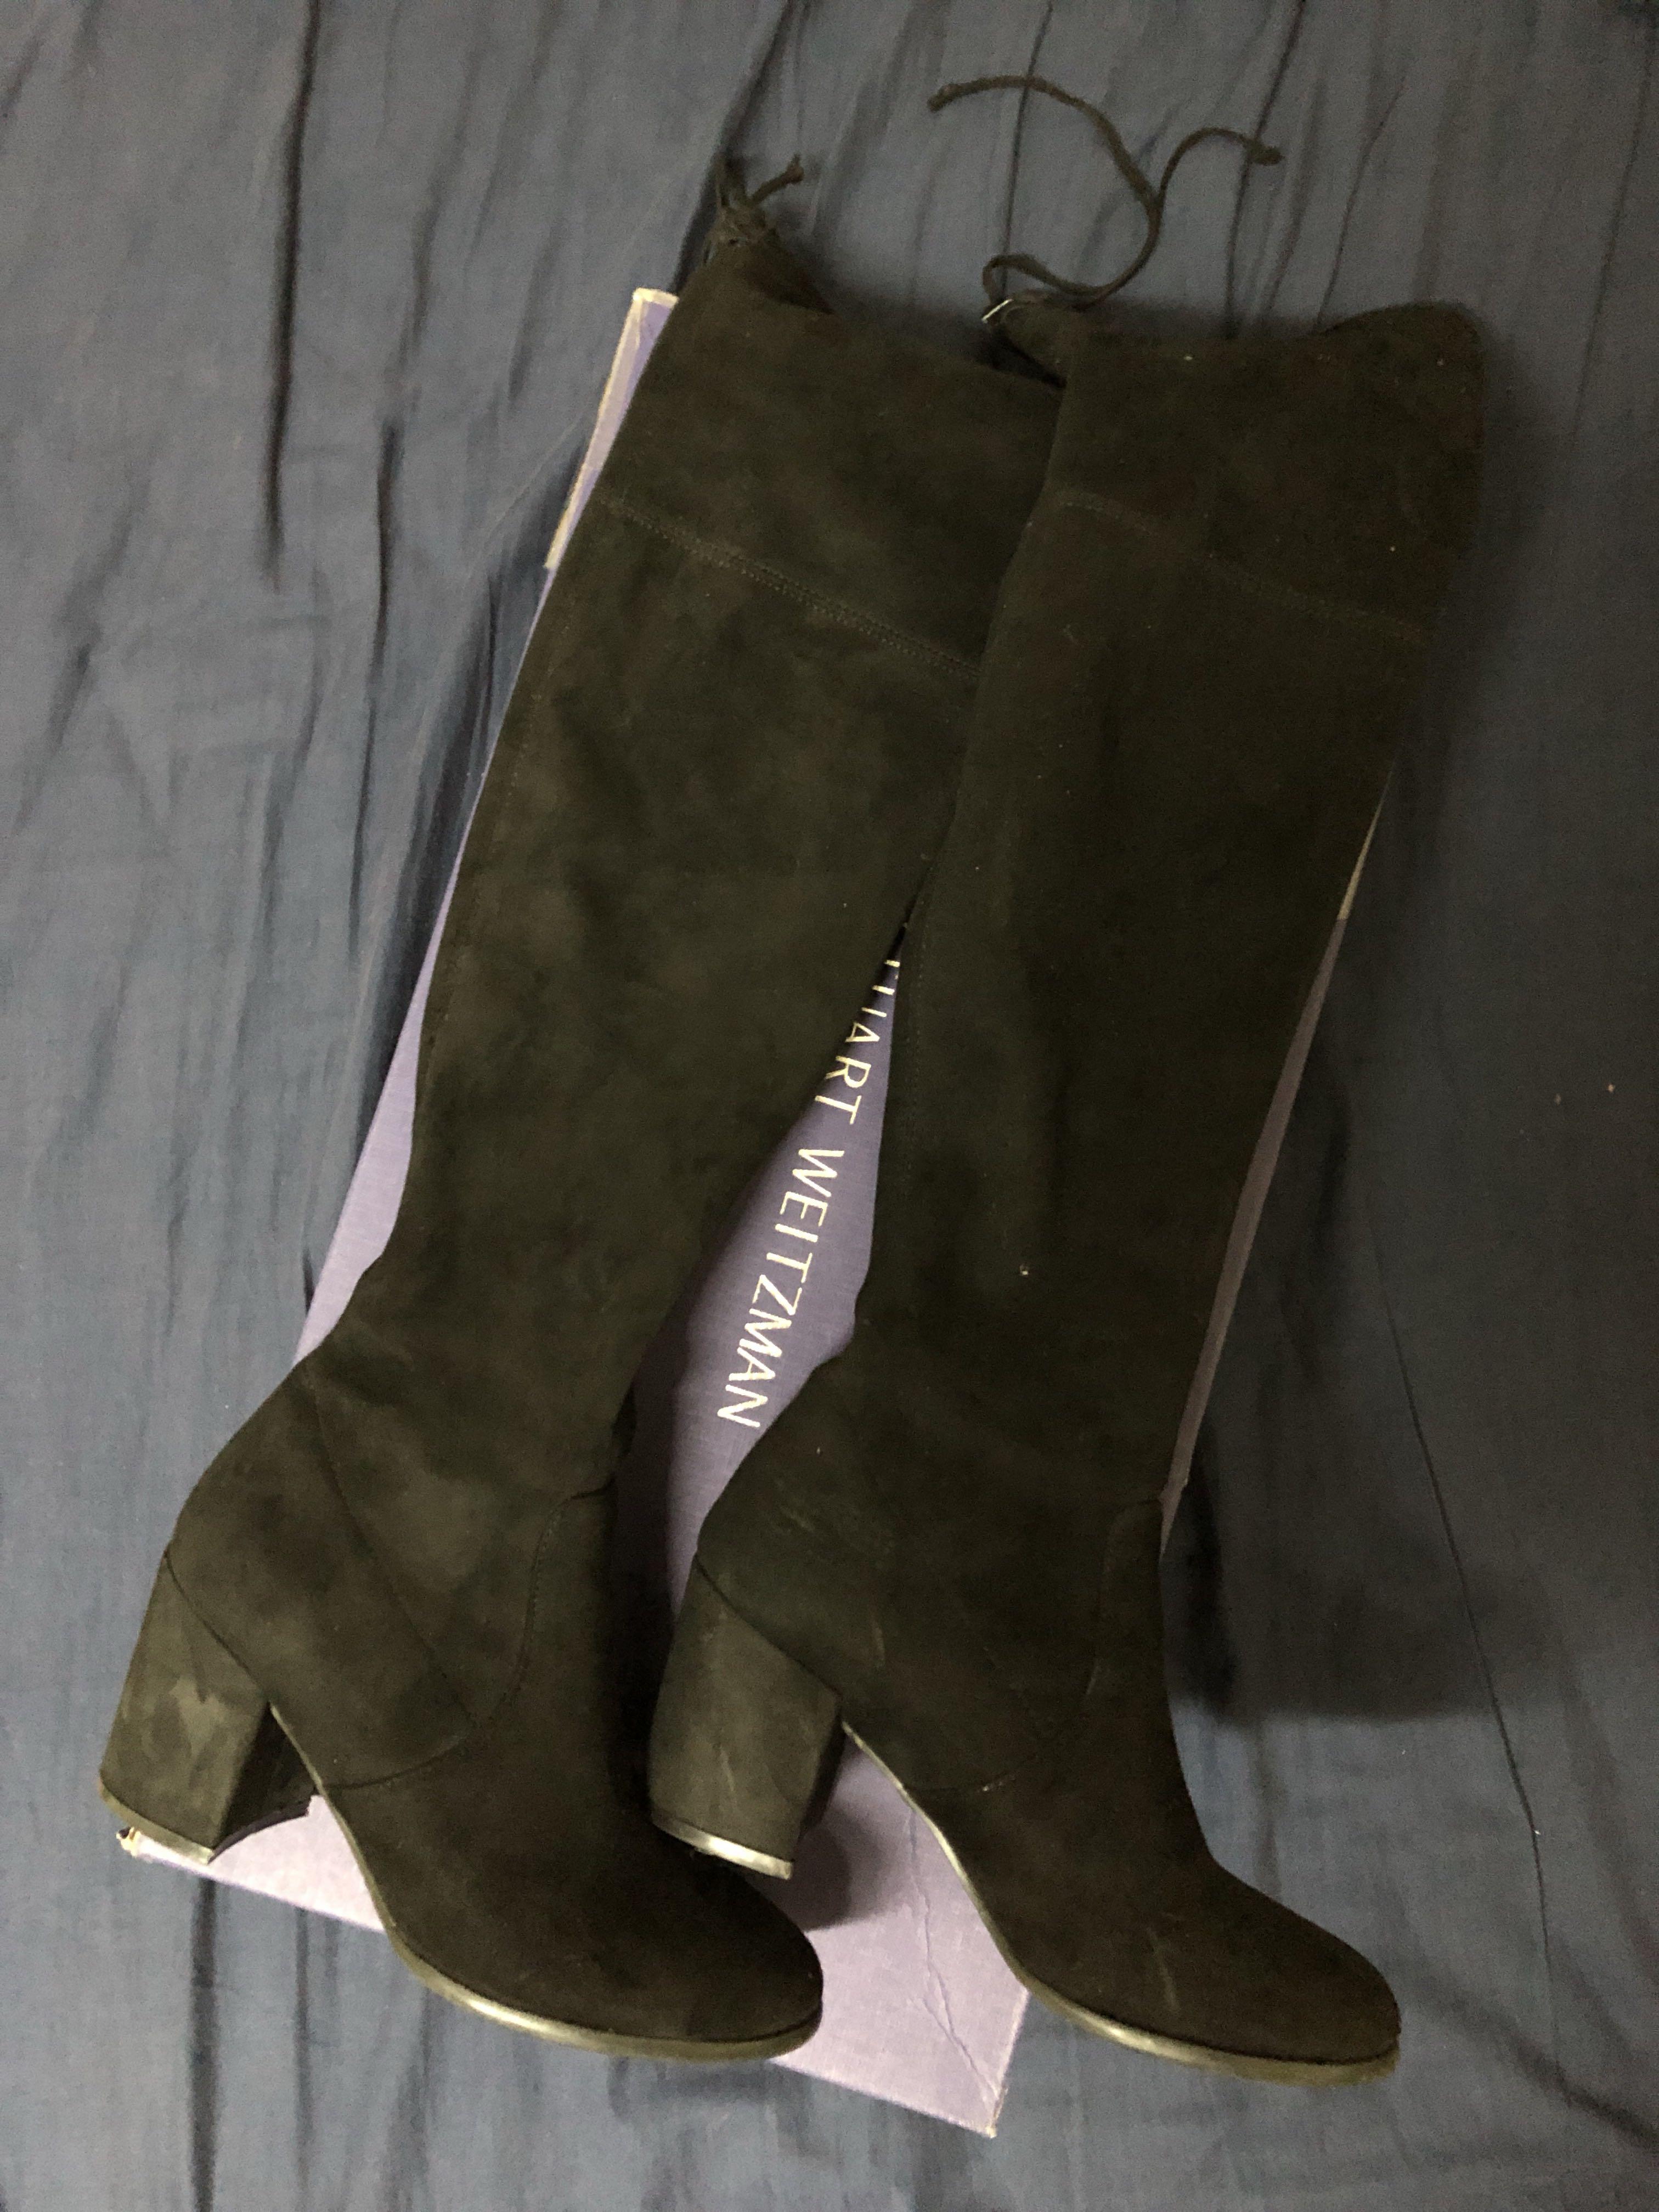 thighland boots